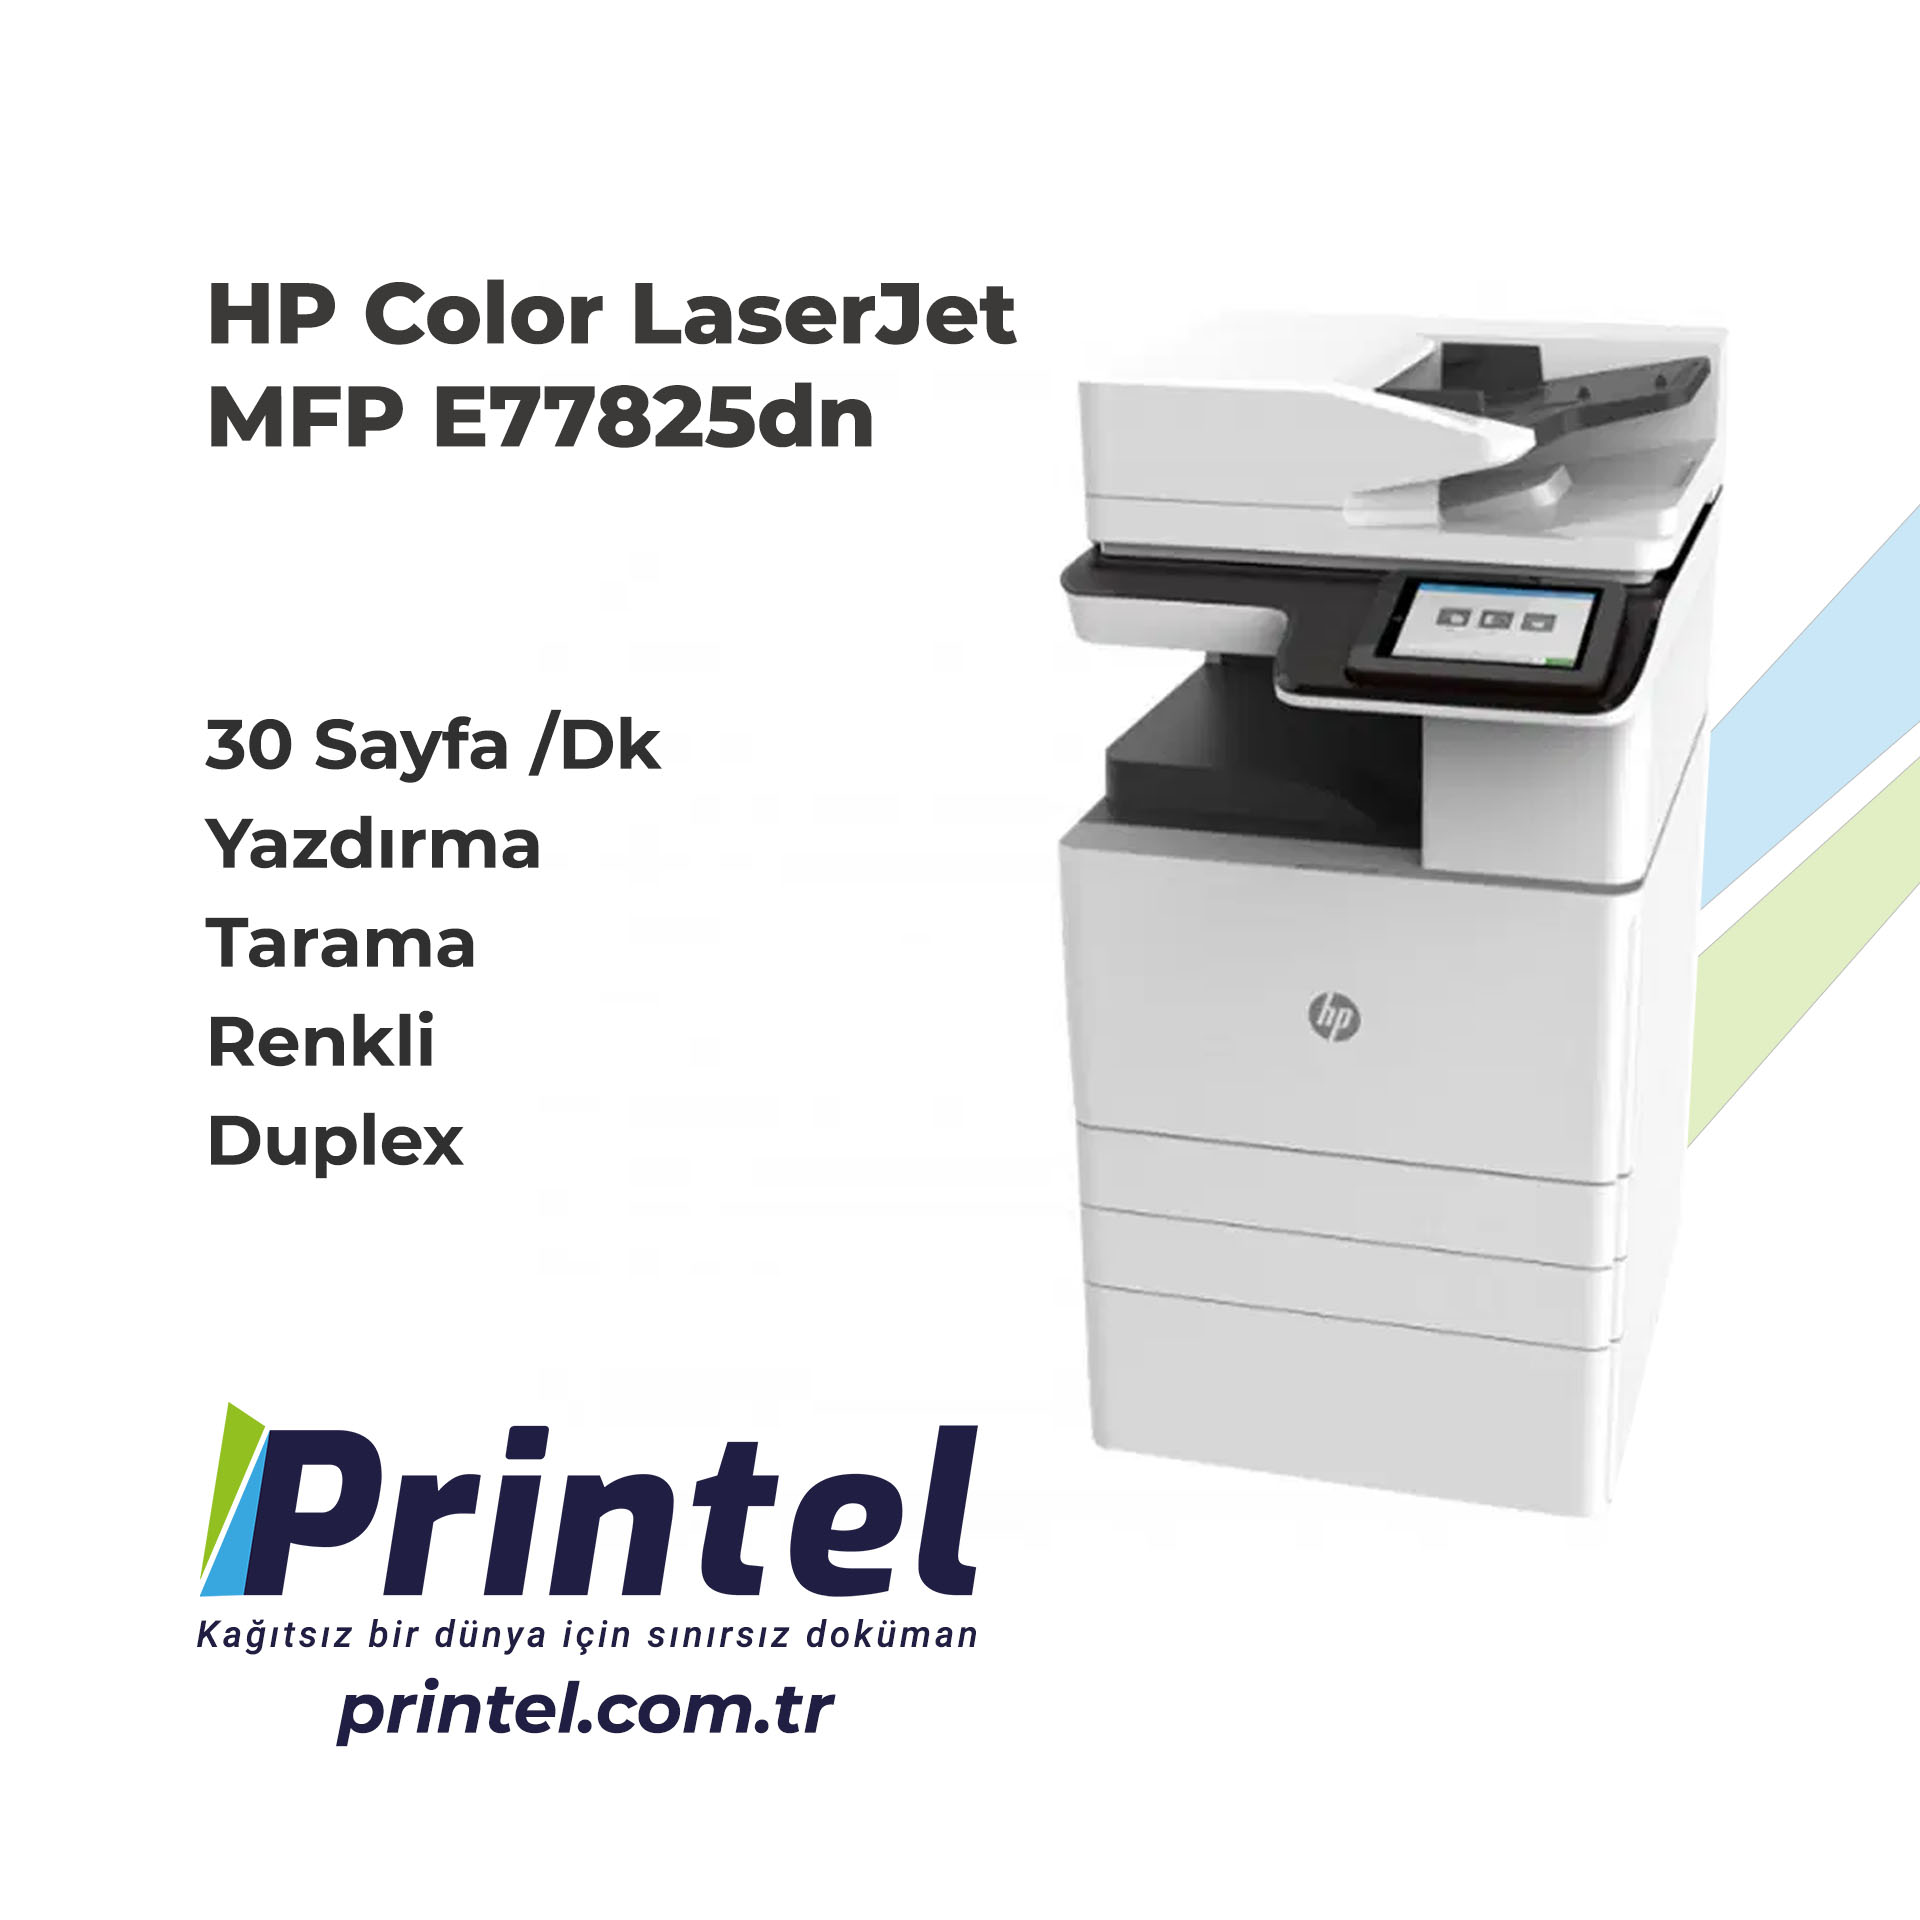 HP Color LaserJet MFP E77825dn 4